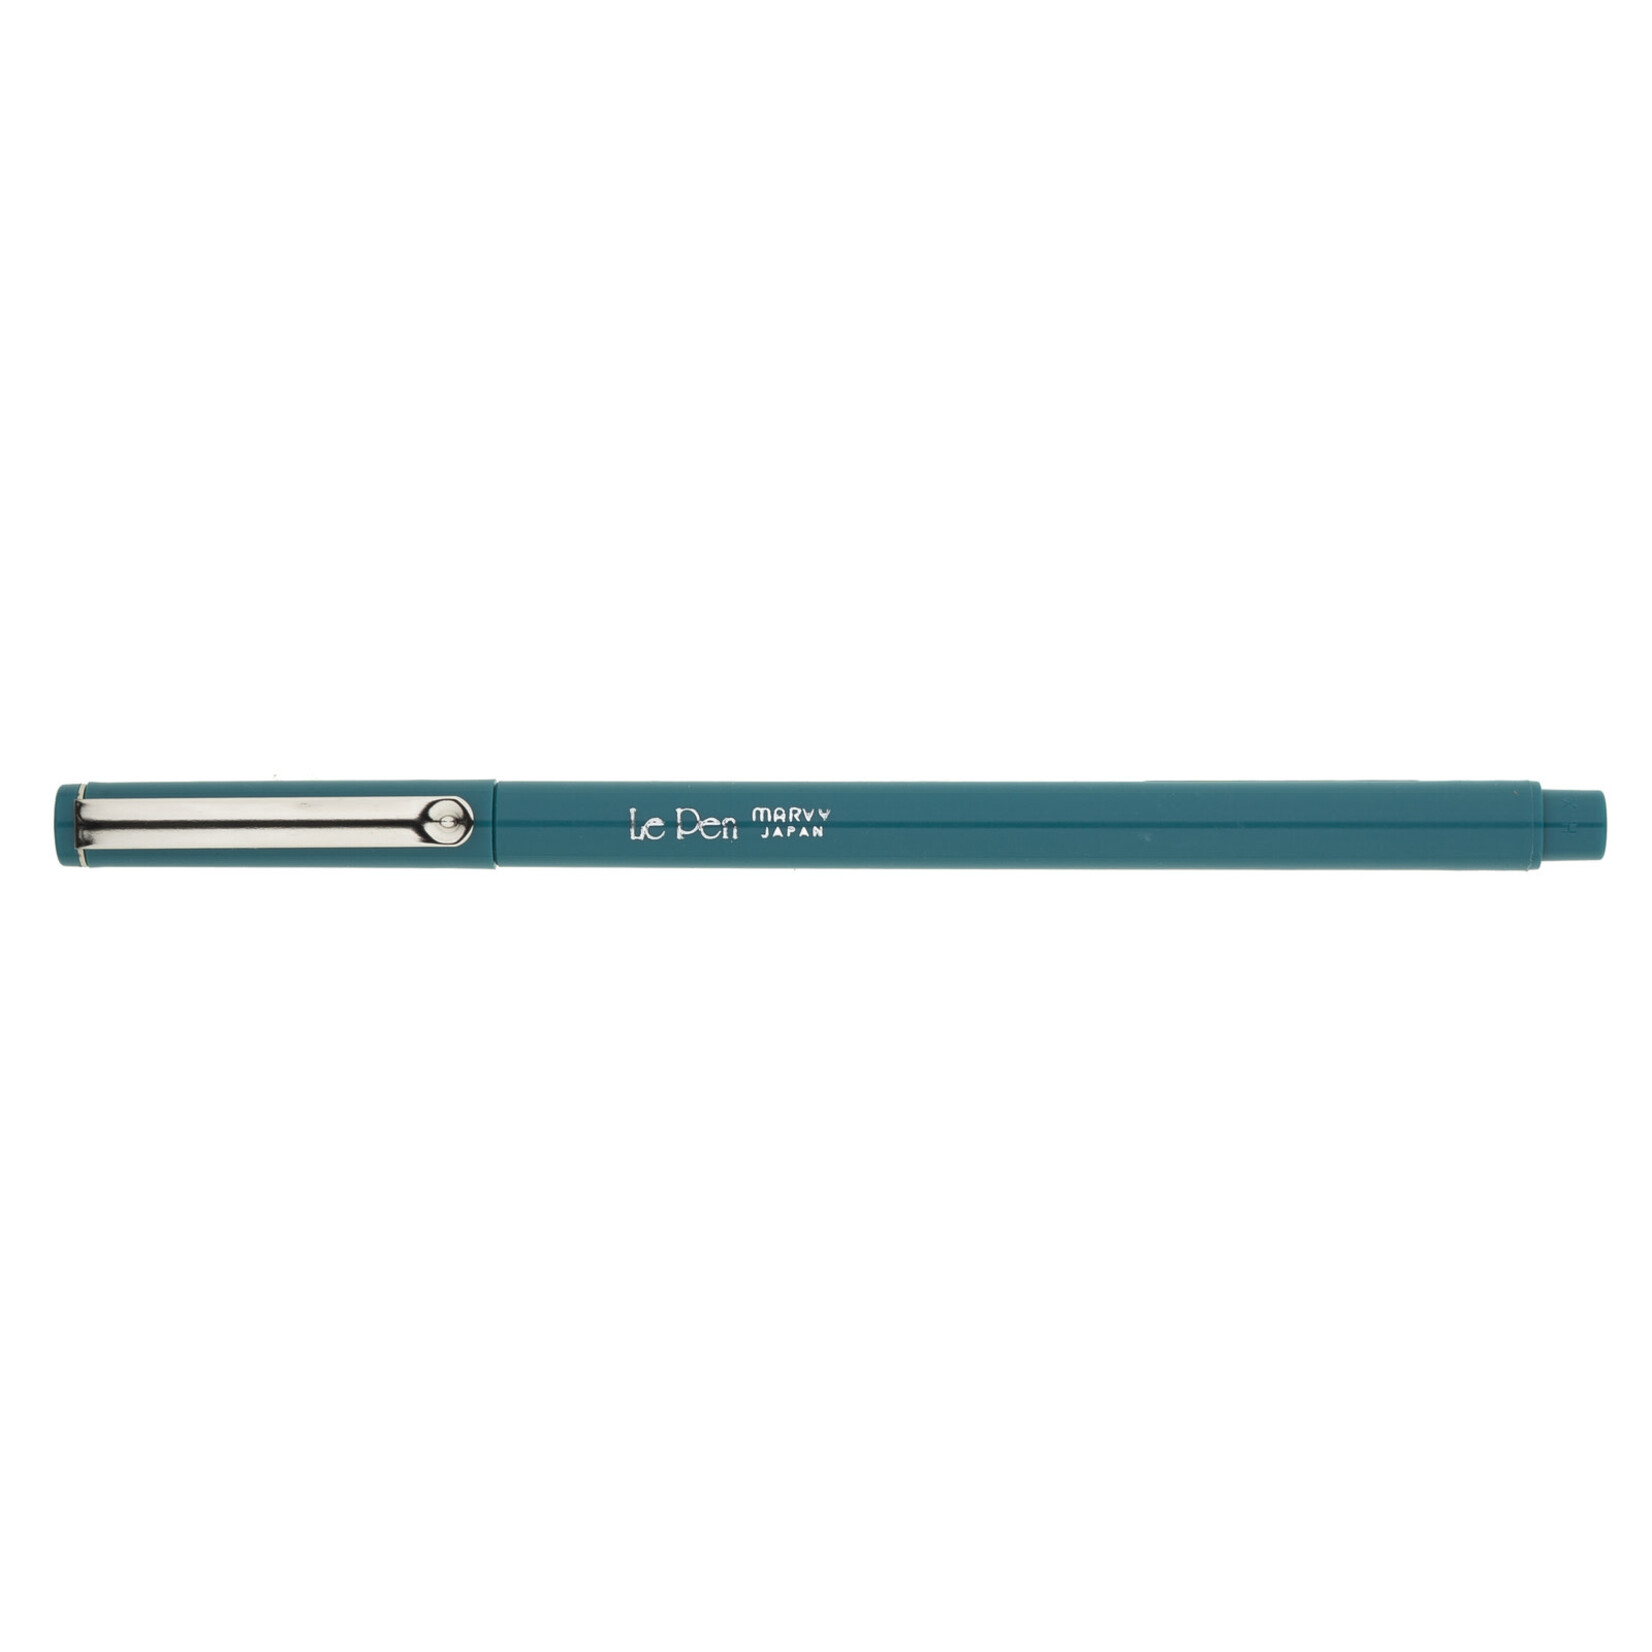 Uchida Le Pen Marker Teal .3mm